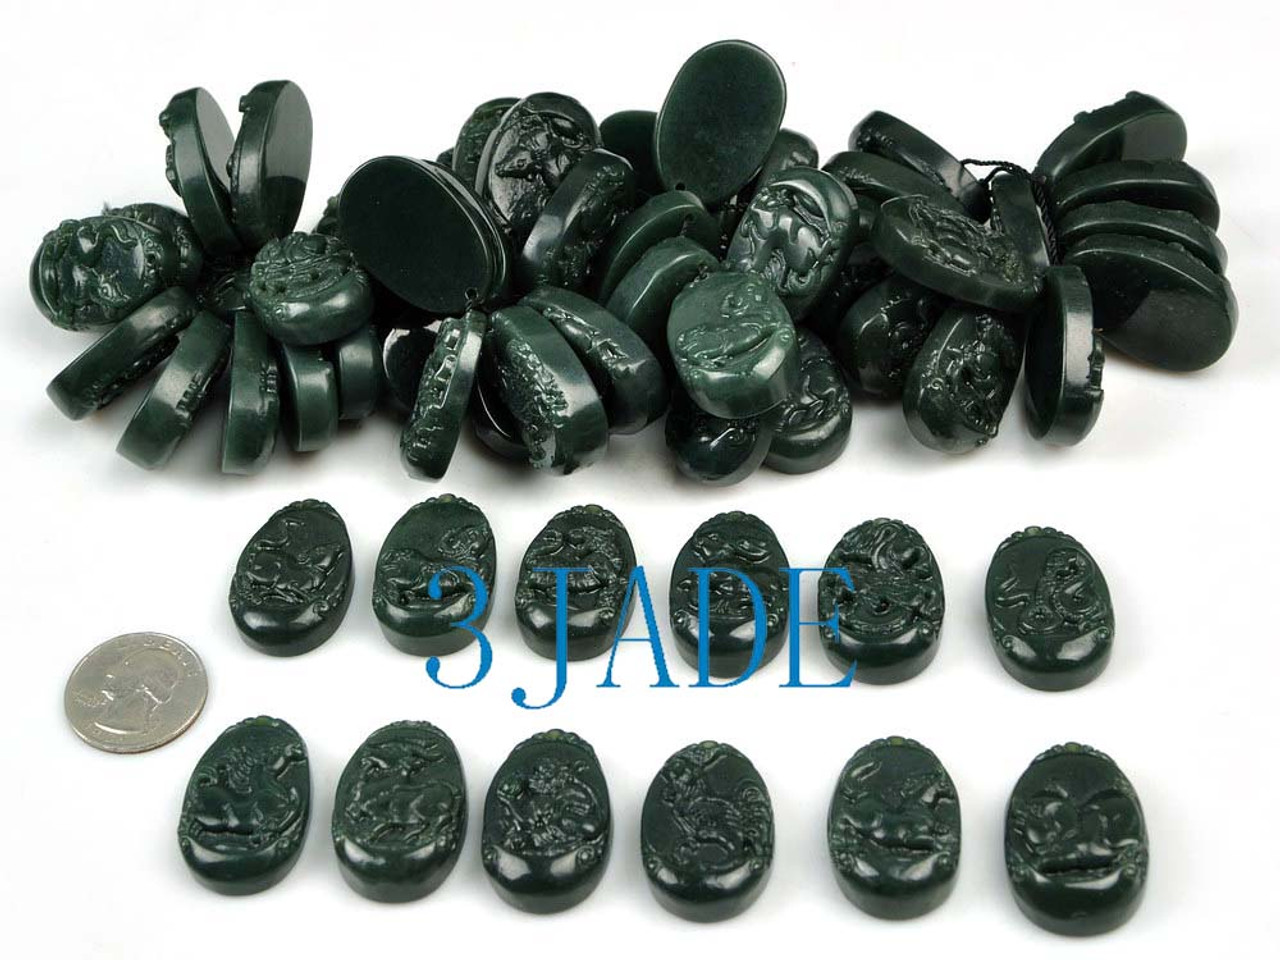 12 Natural Nephrite Jade Chinese Zodiac Animal Amulets Pendants Wholesale